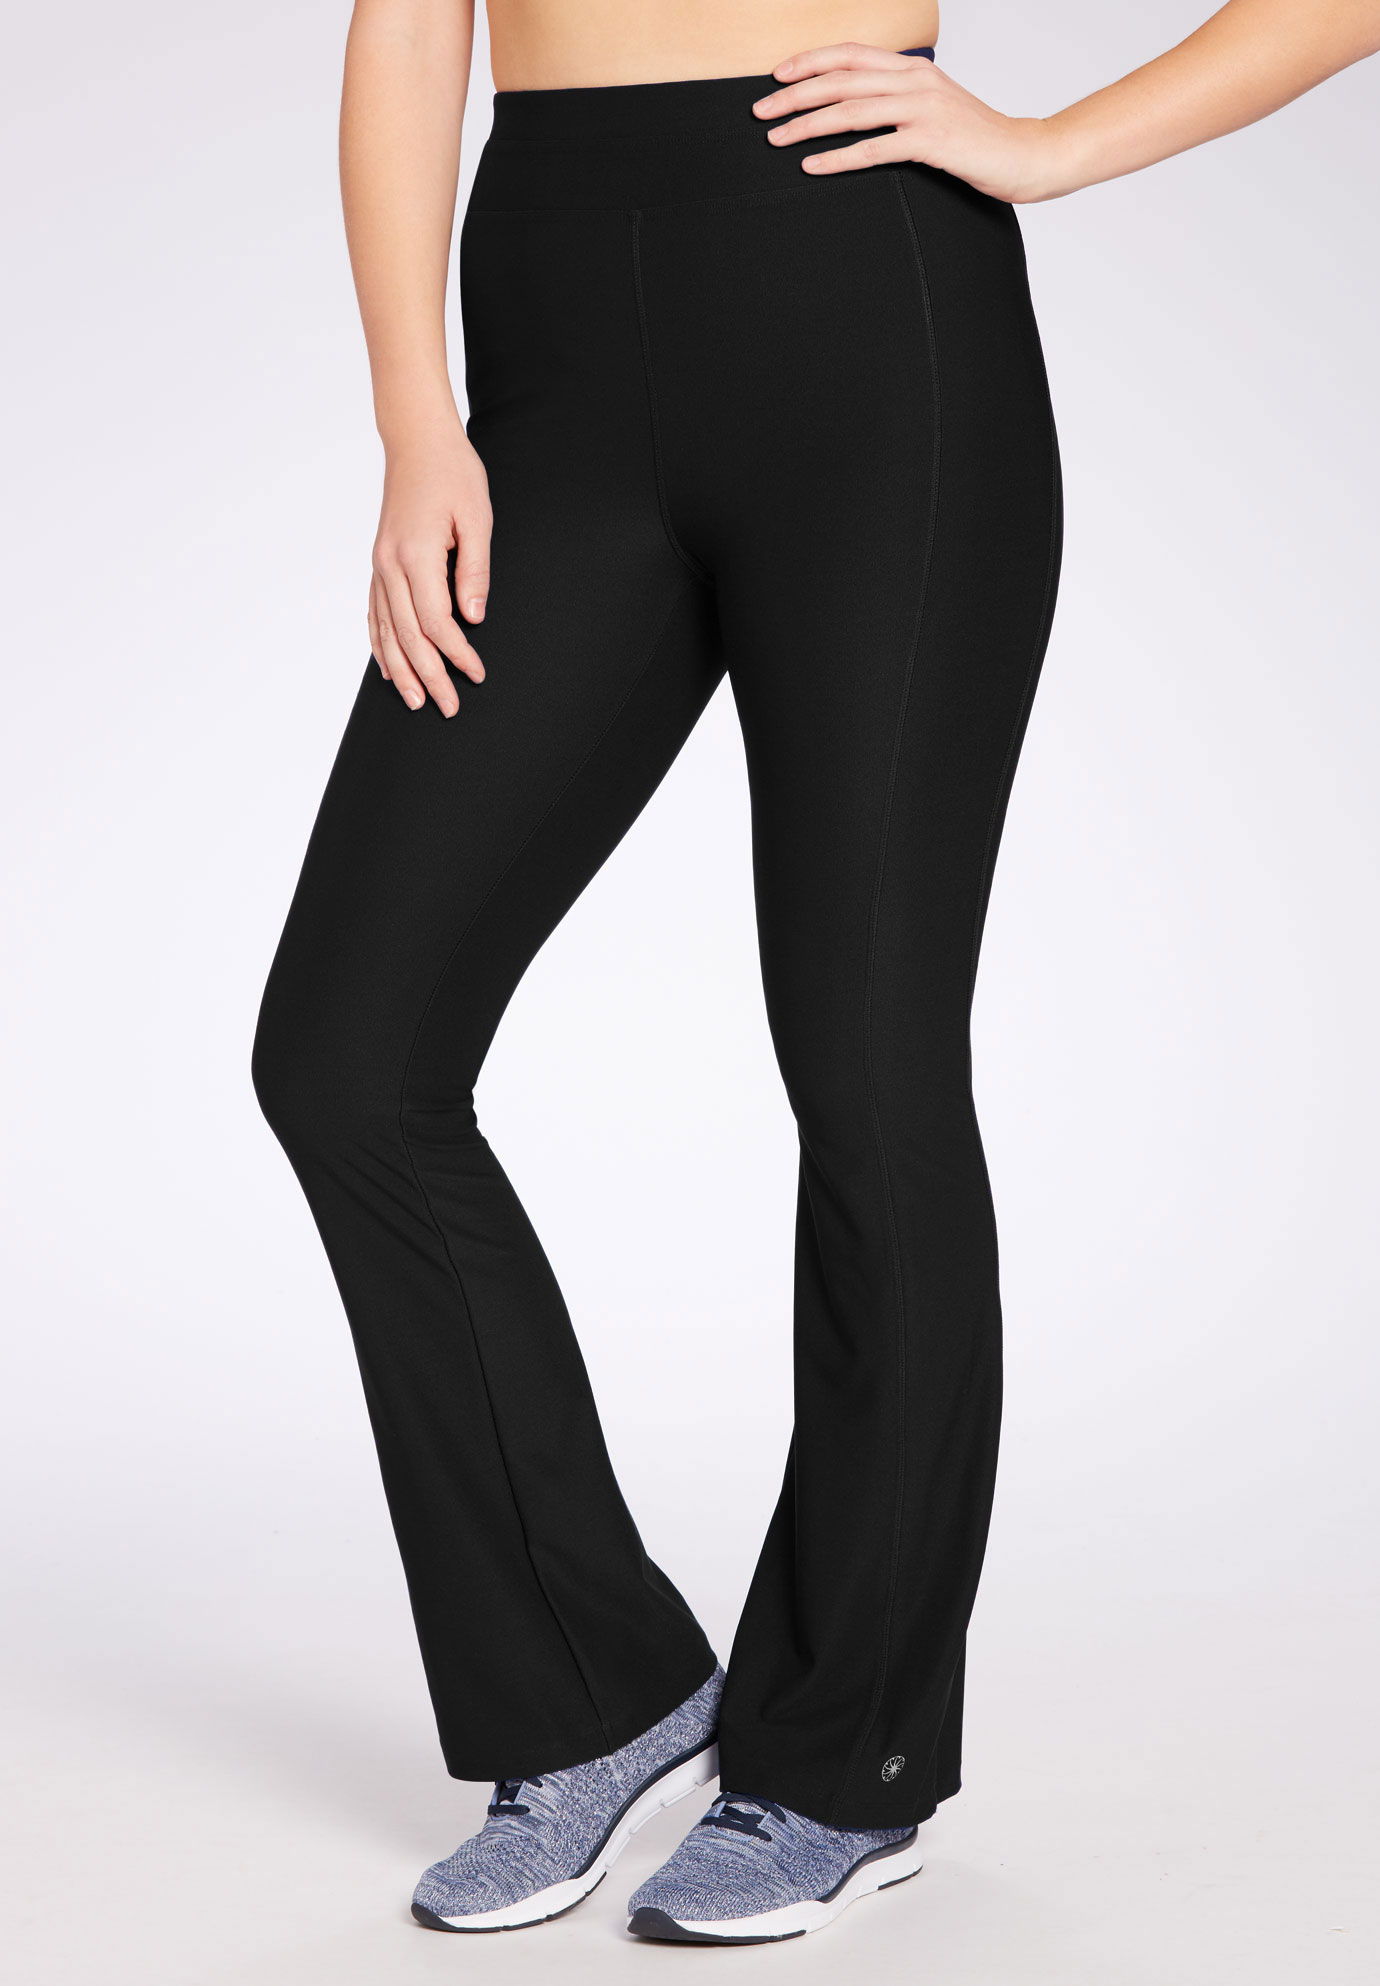 Bootcut Yoga Pant by FullBeauty SPORTÂ®| Plus Size Pants | Woman Within